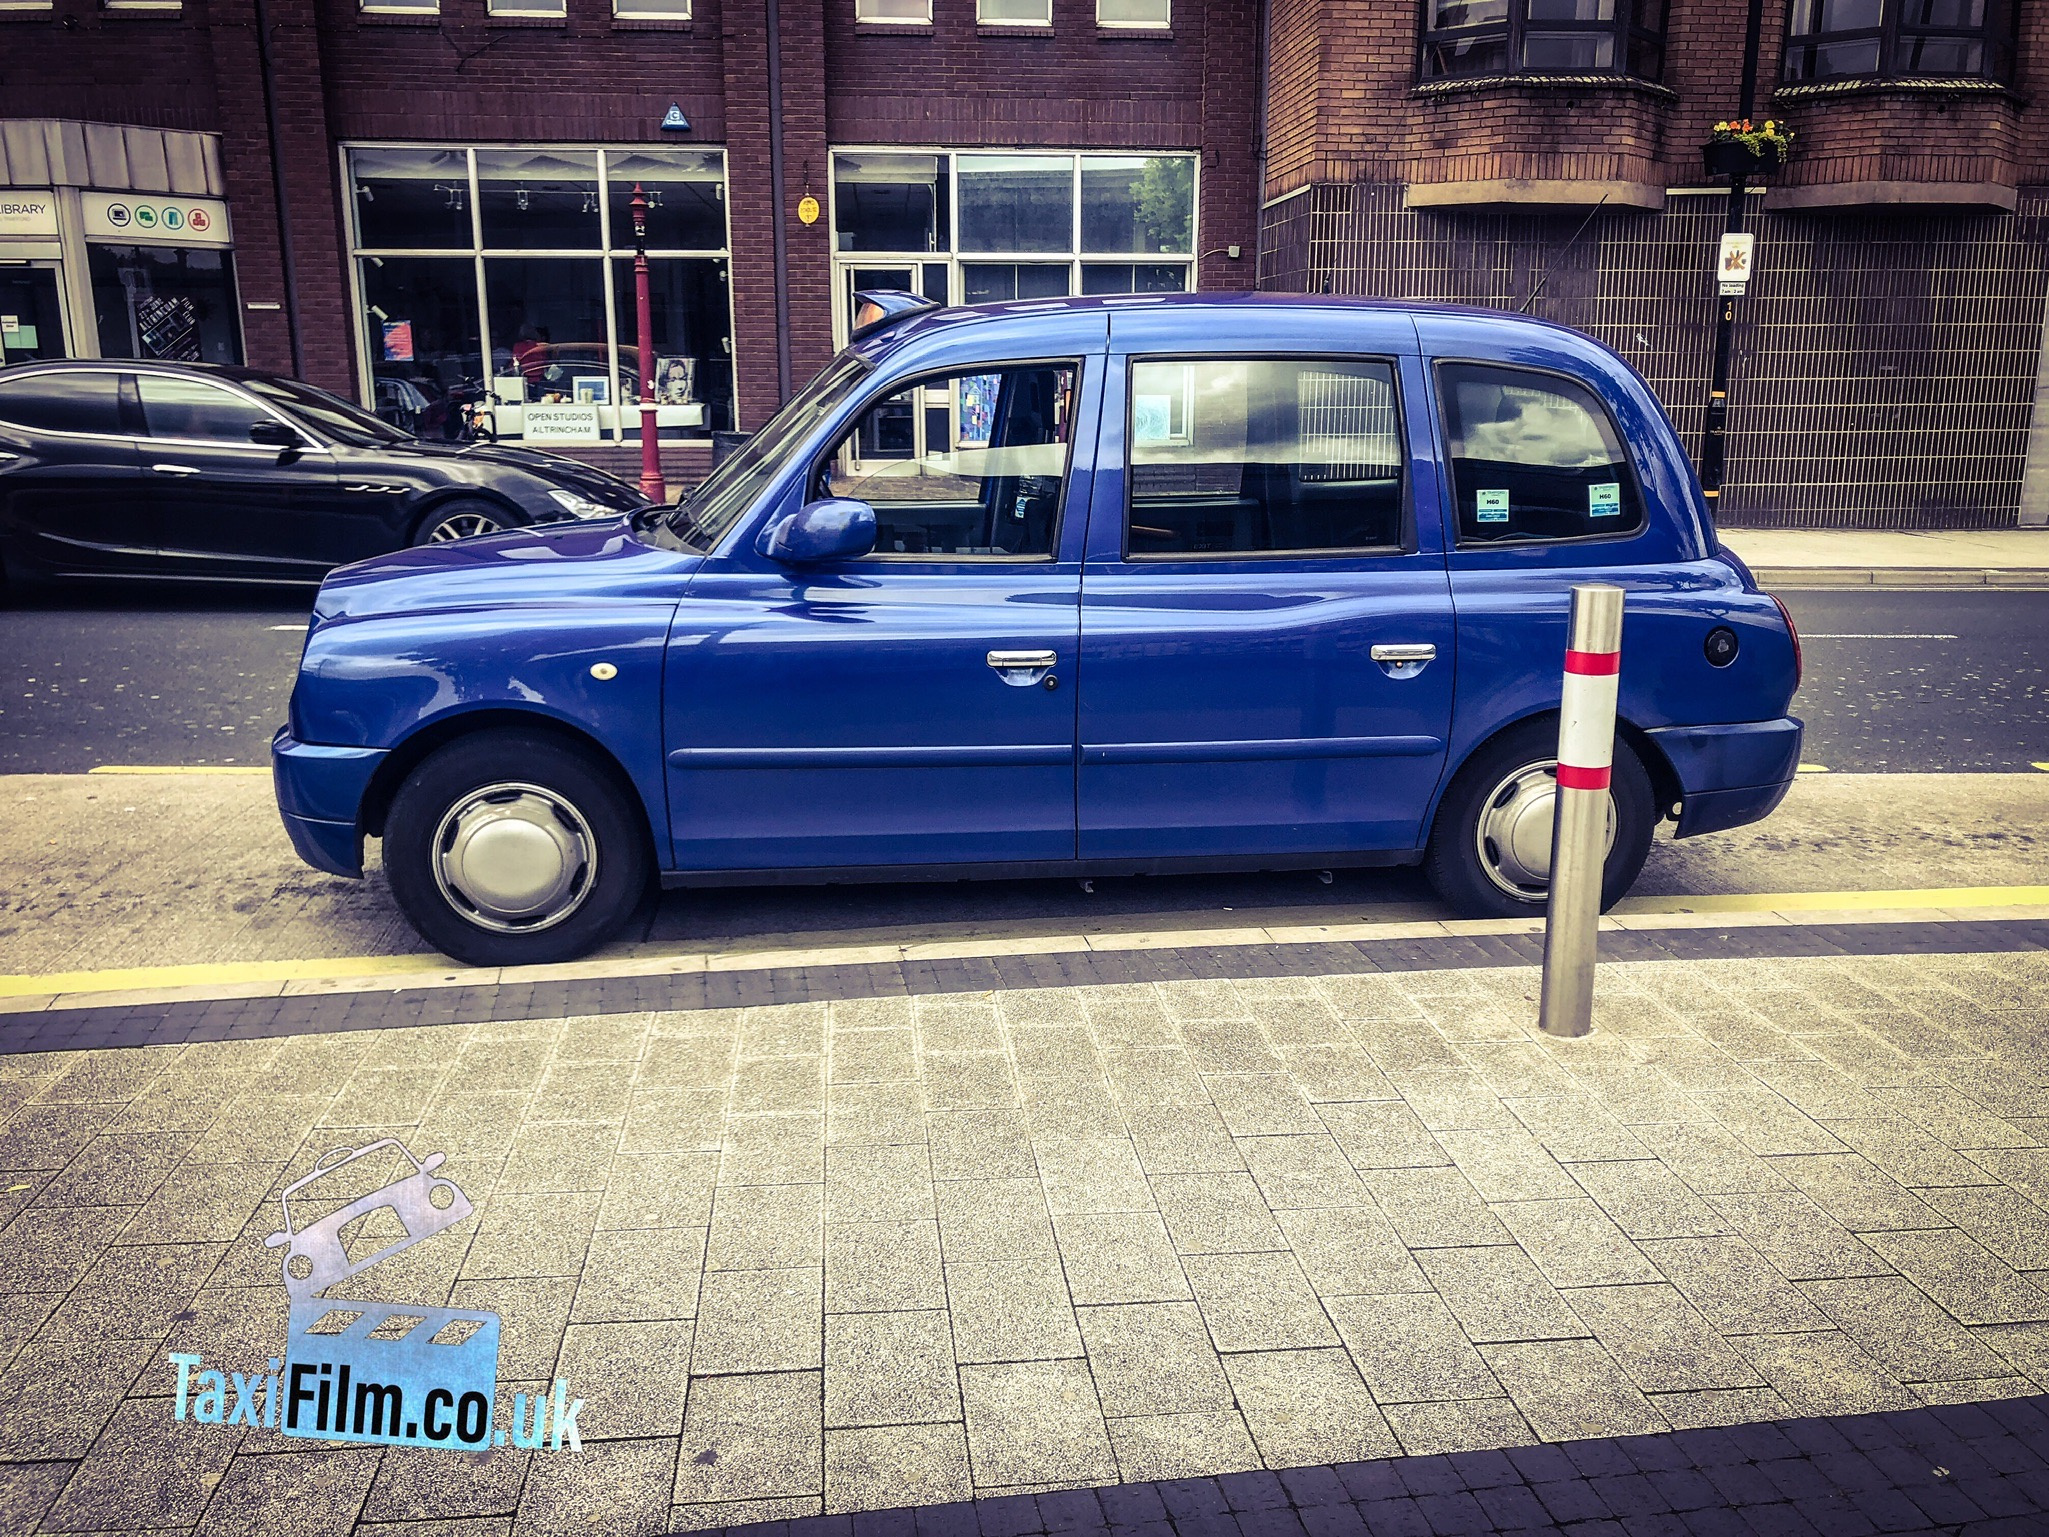 Blue Tx4 Taxi, 2014, Manchester
ref M0004